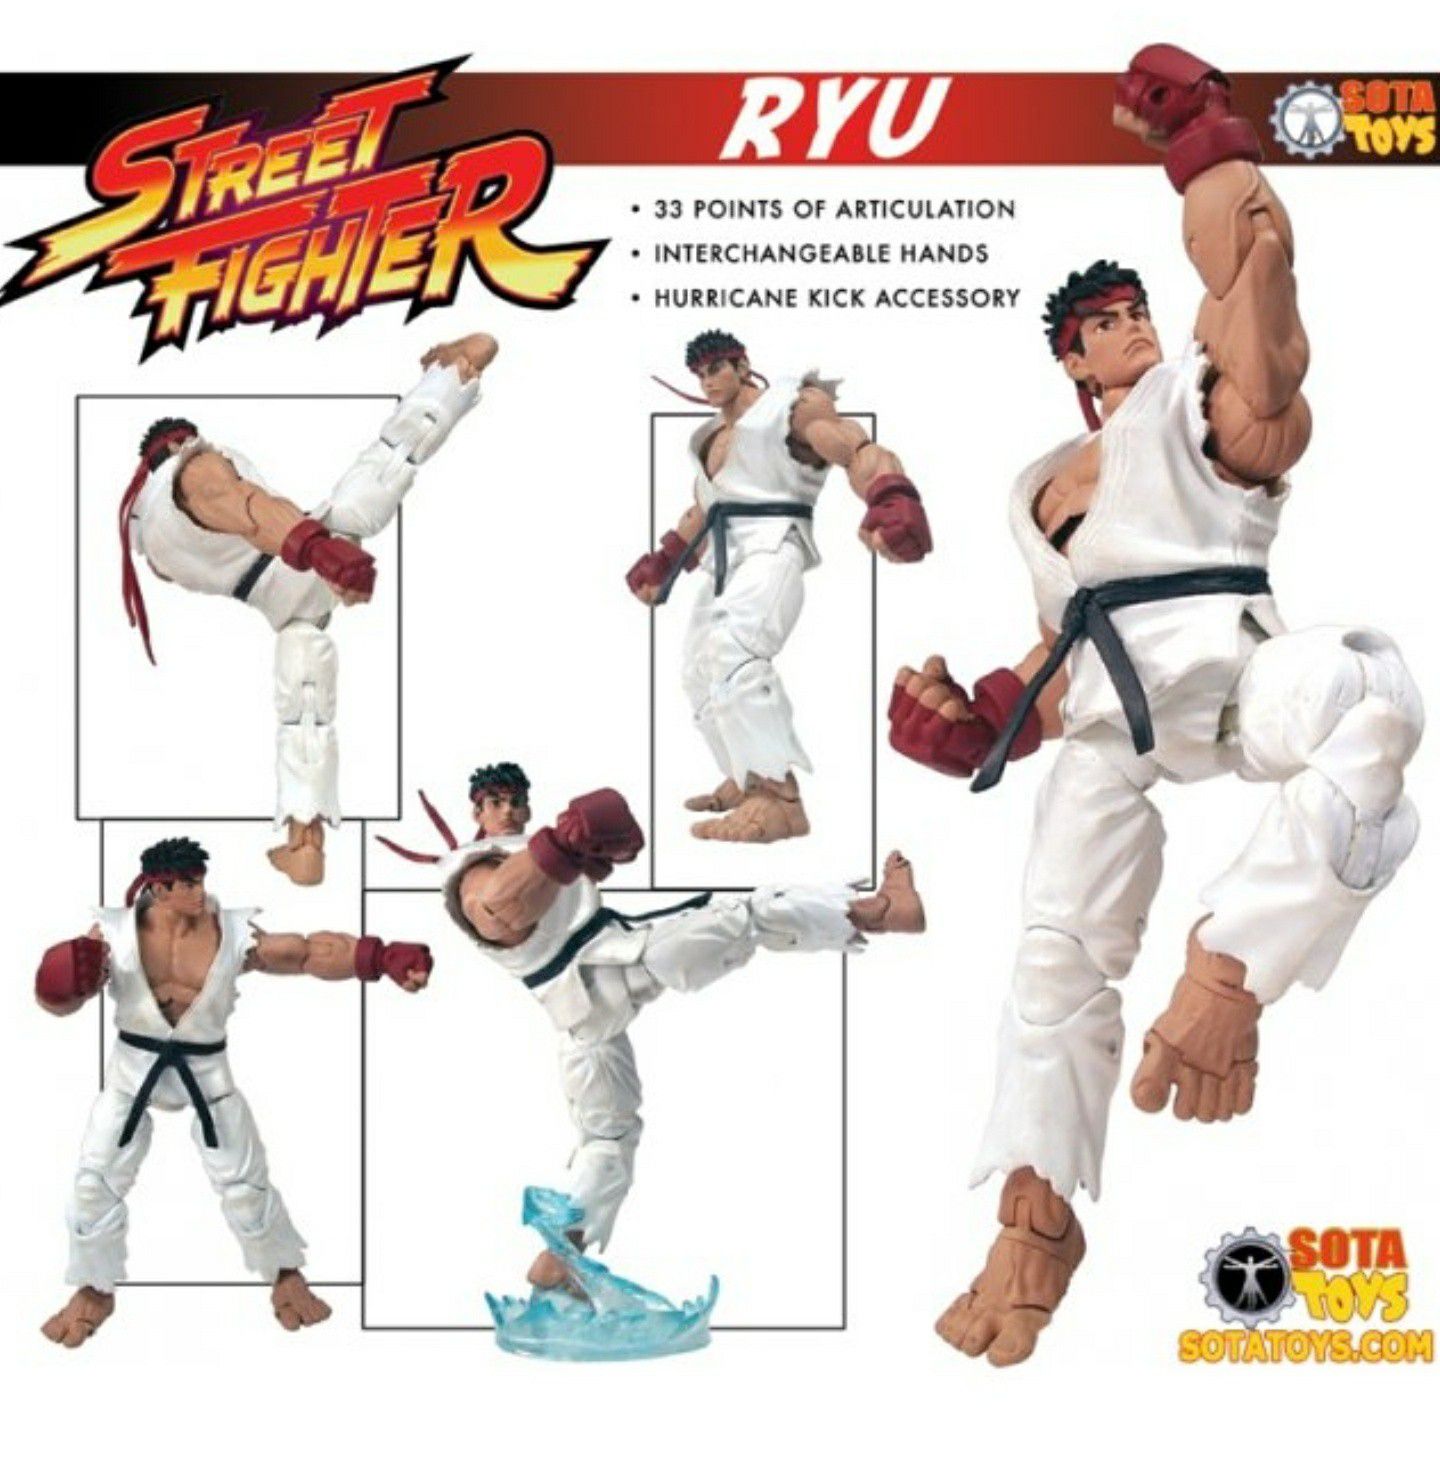 NEW Ryu figure SOTA TOYS 2007